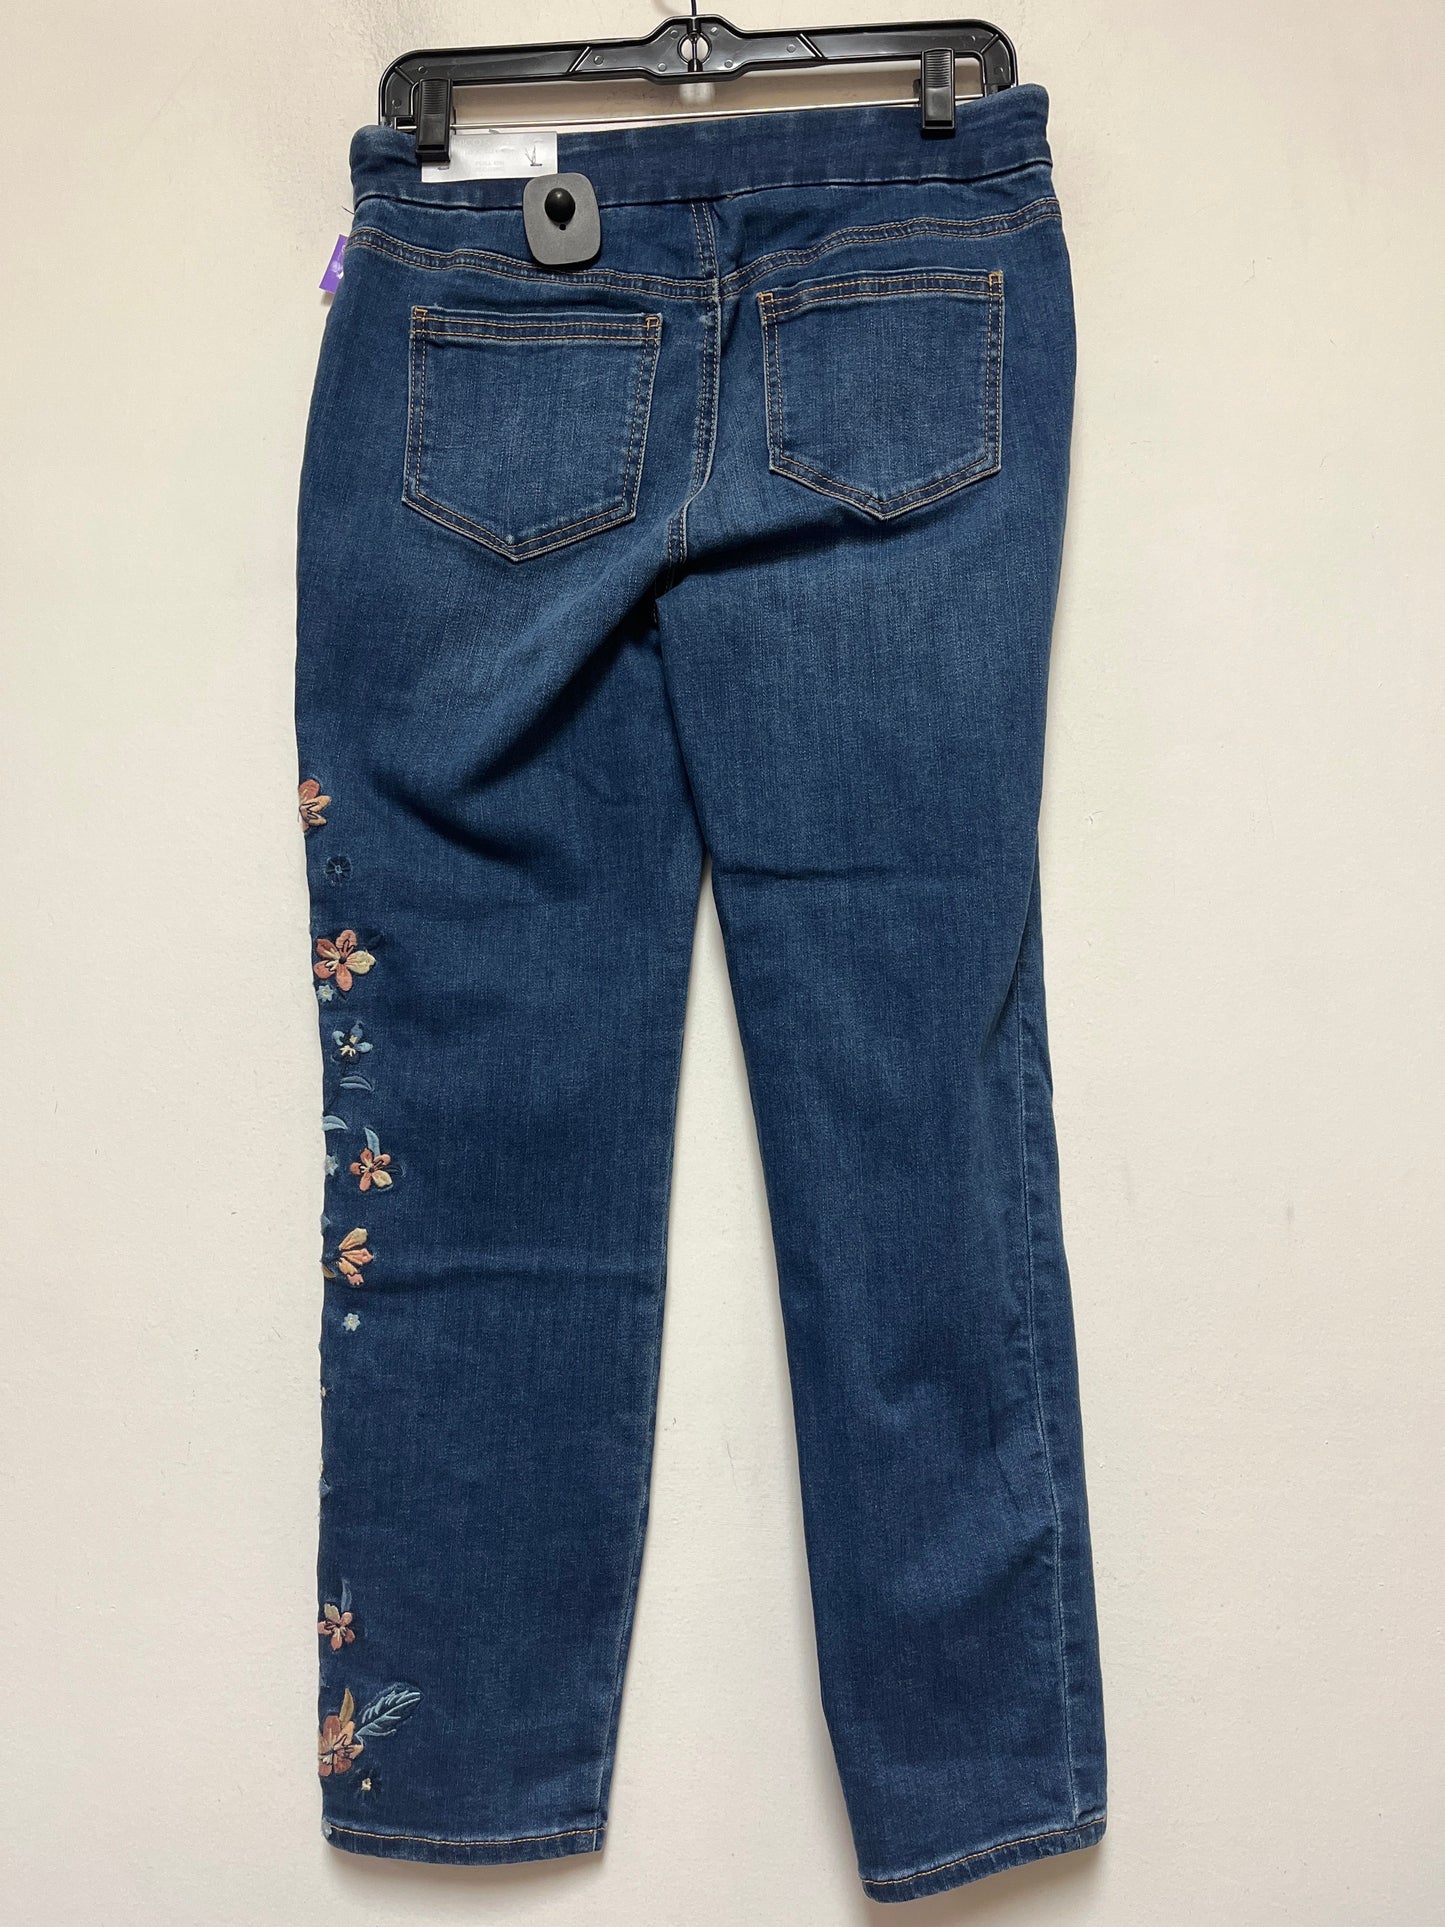 Blue Denim Jeans Jeggings Chicos, Size 4